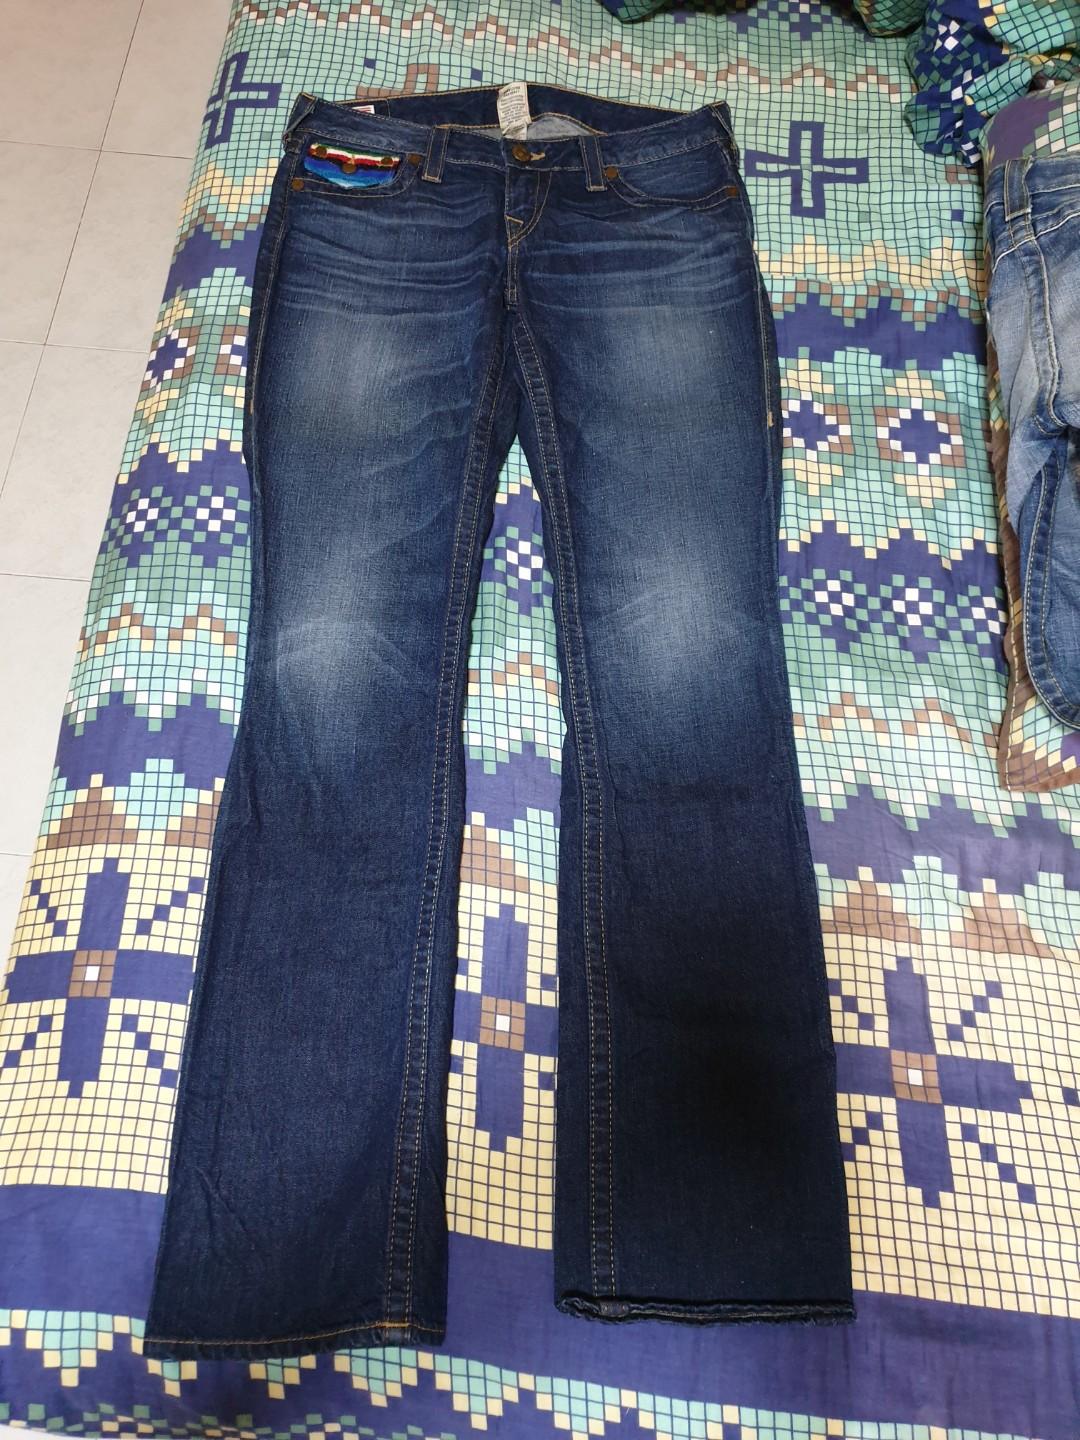 true religion jeans for women price